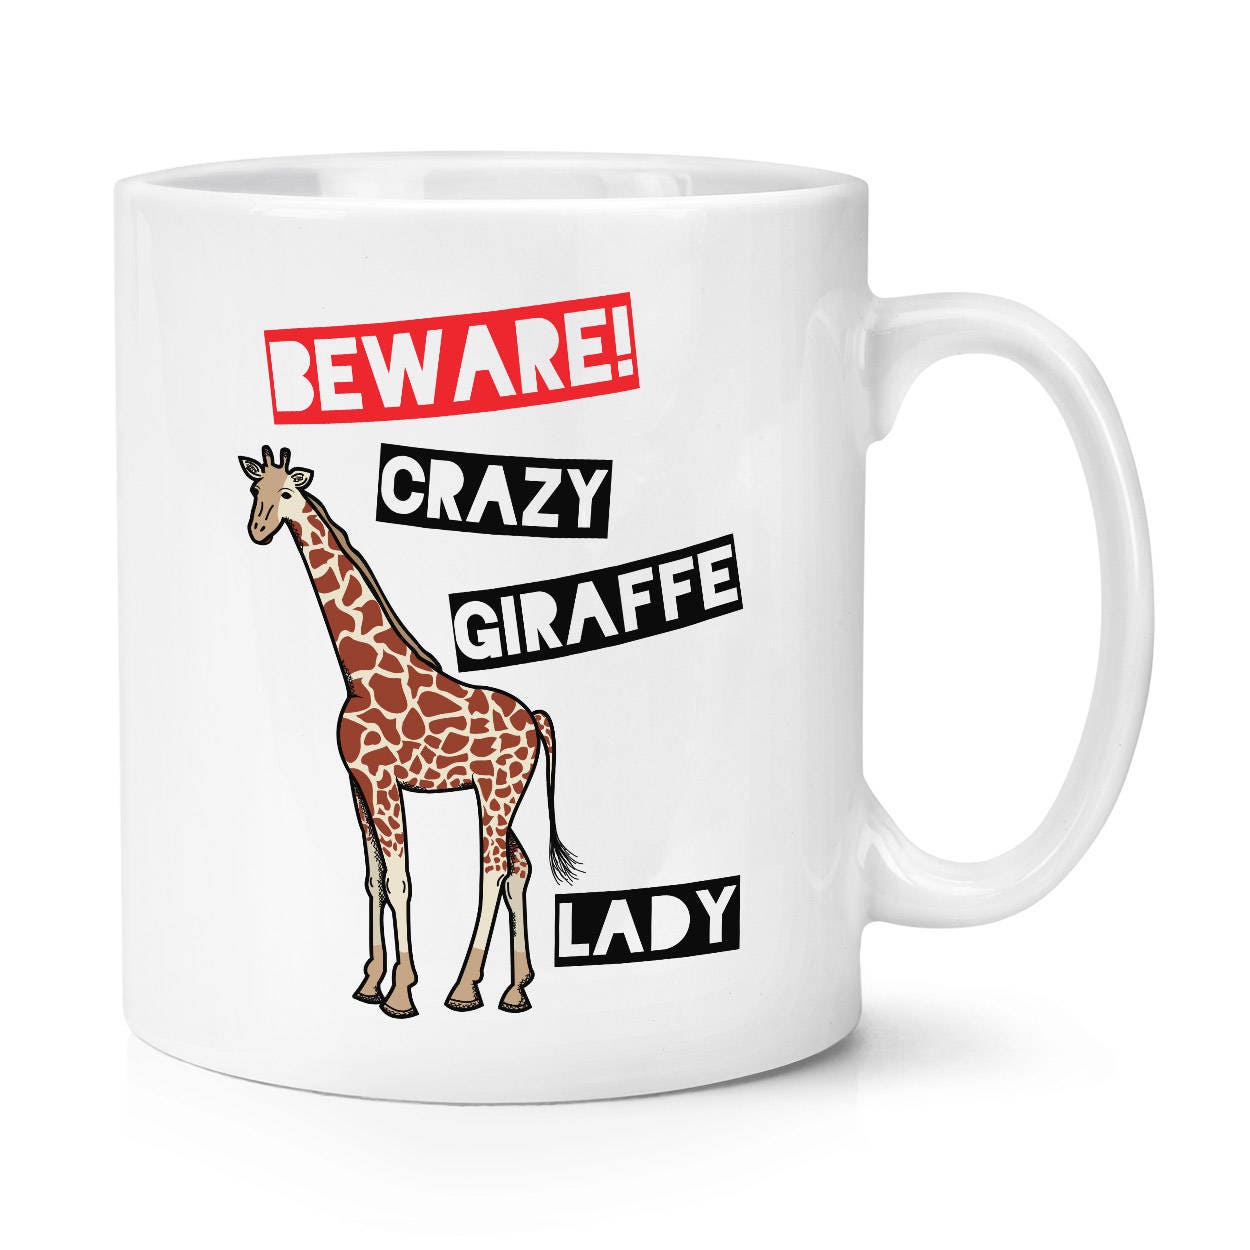 Beware Crazy Giraffe Lady Printed Funny Coffee Mug lovely Present 